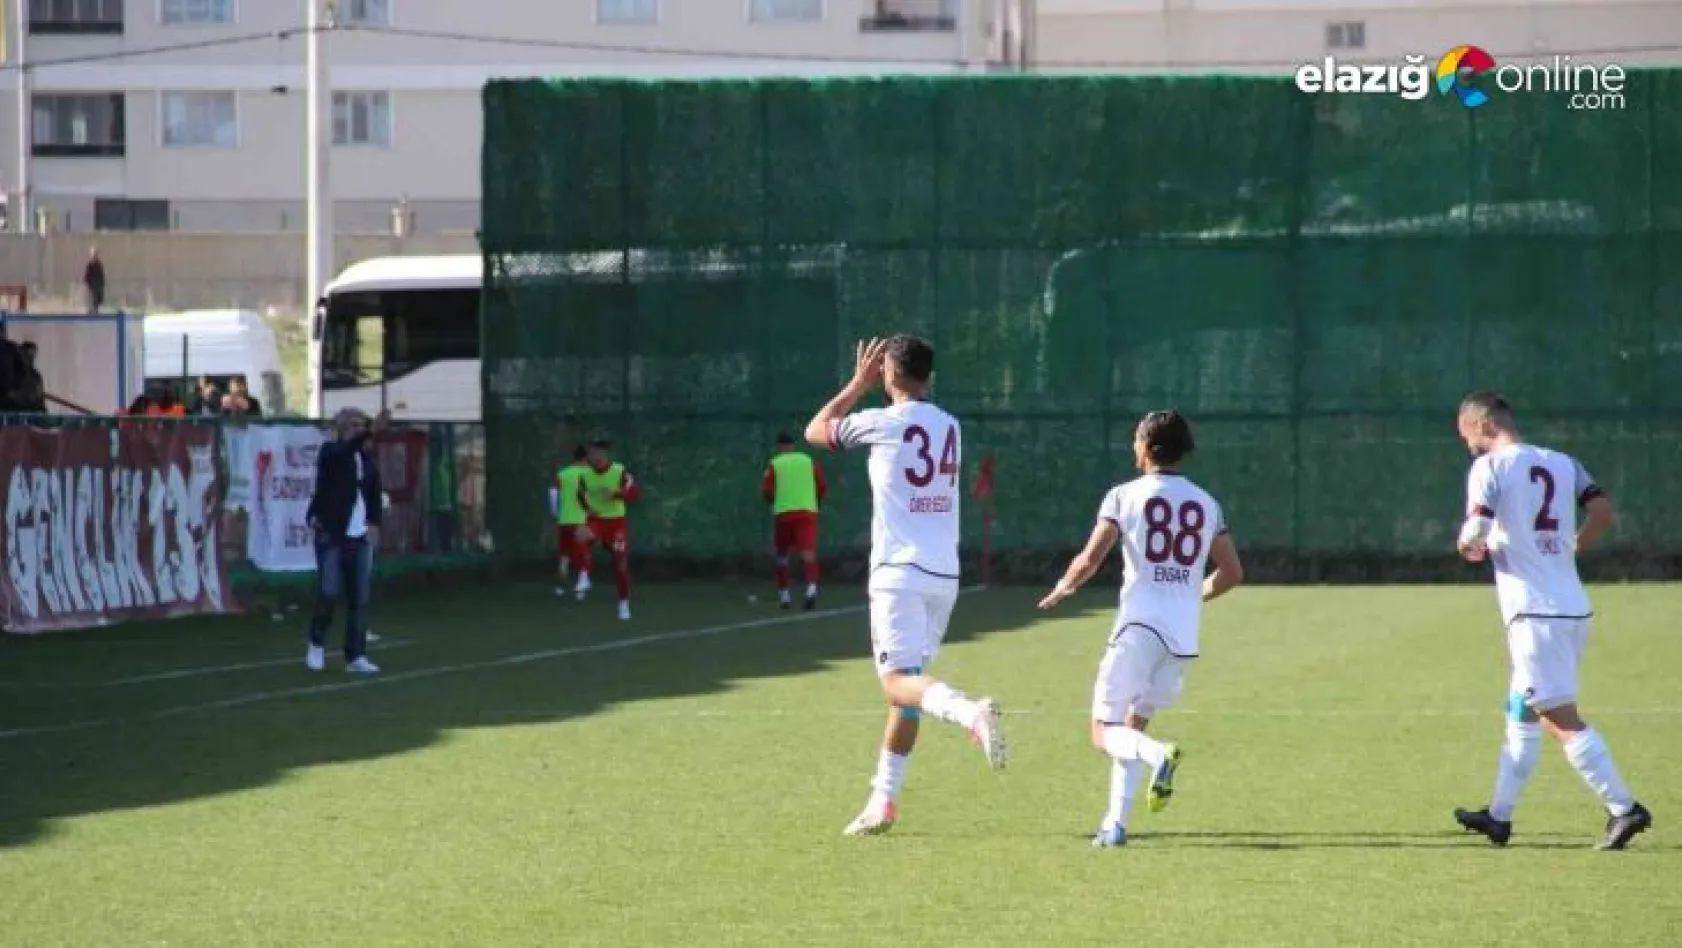 İşte kümede kalmayı başaran Elazığspor'un gol raporu